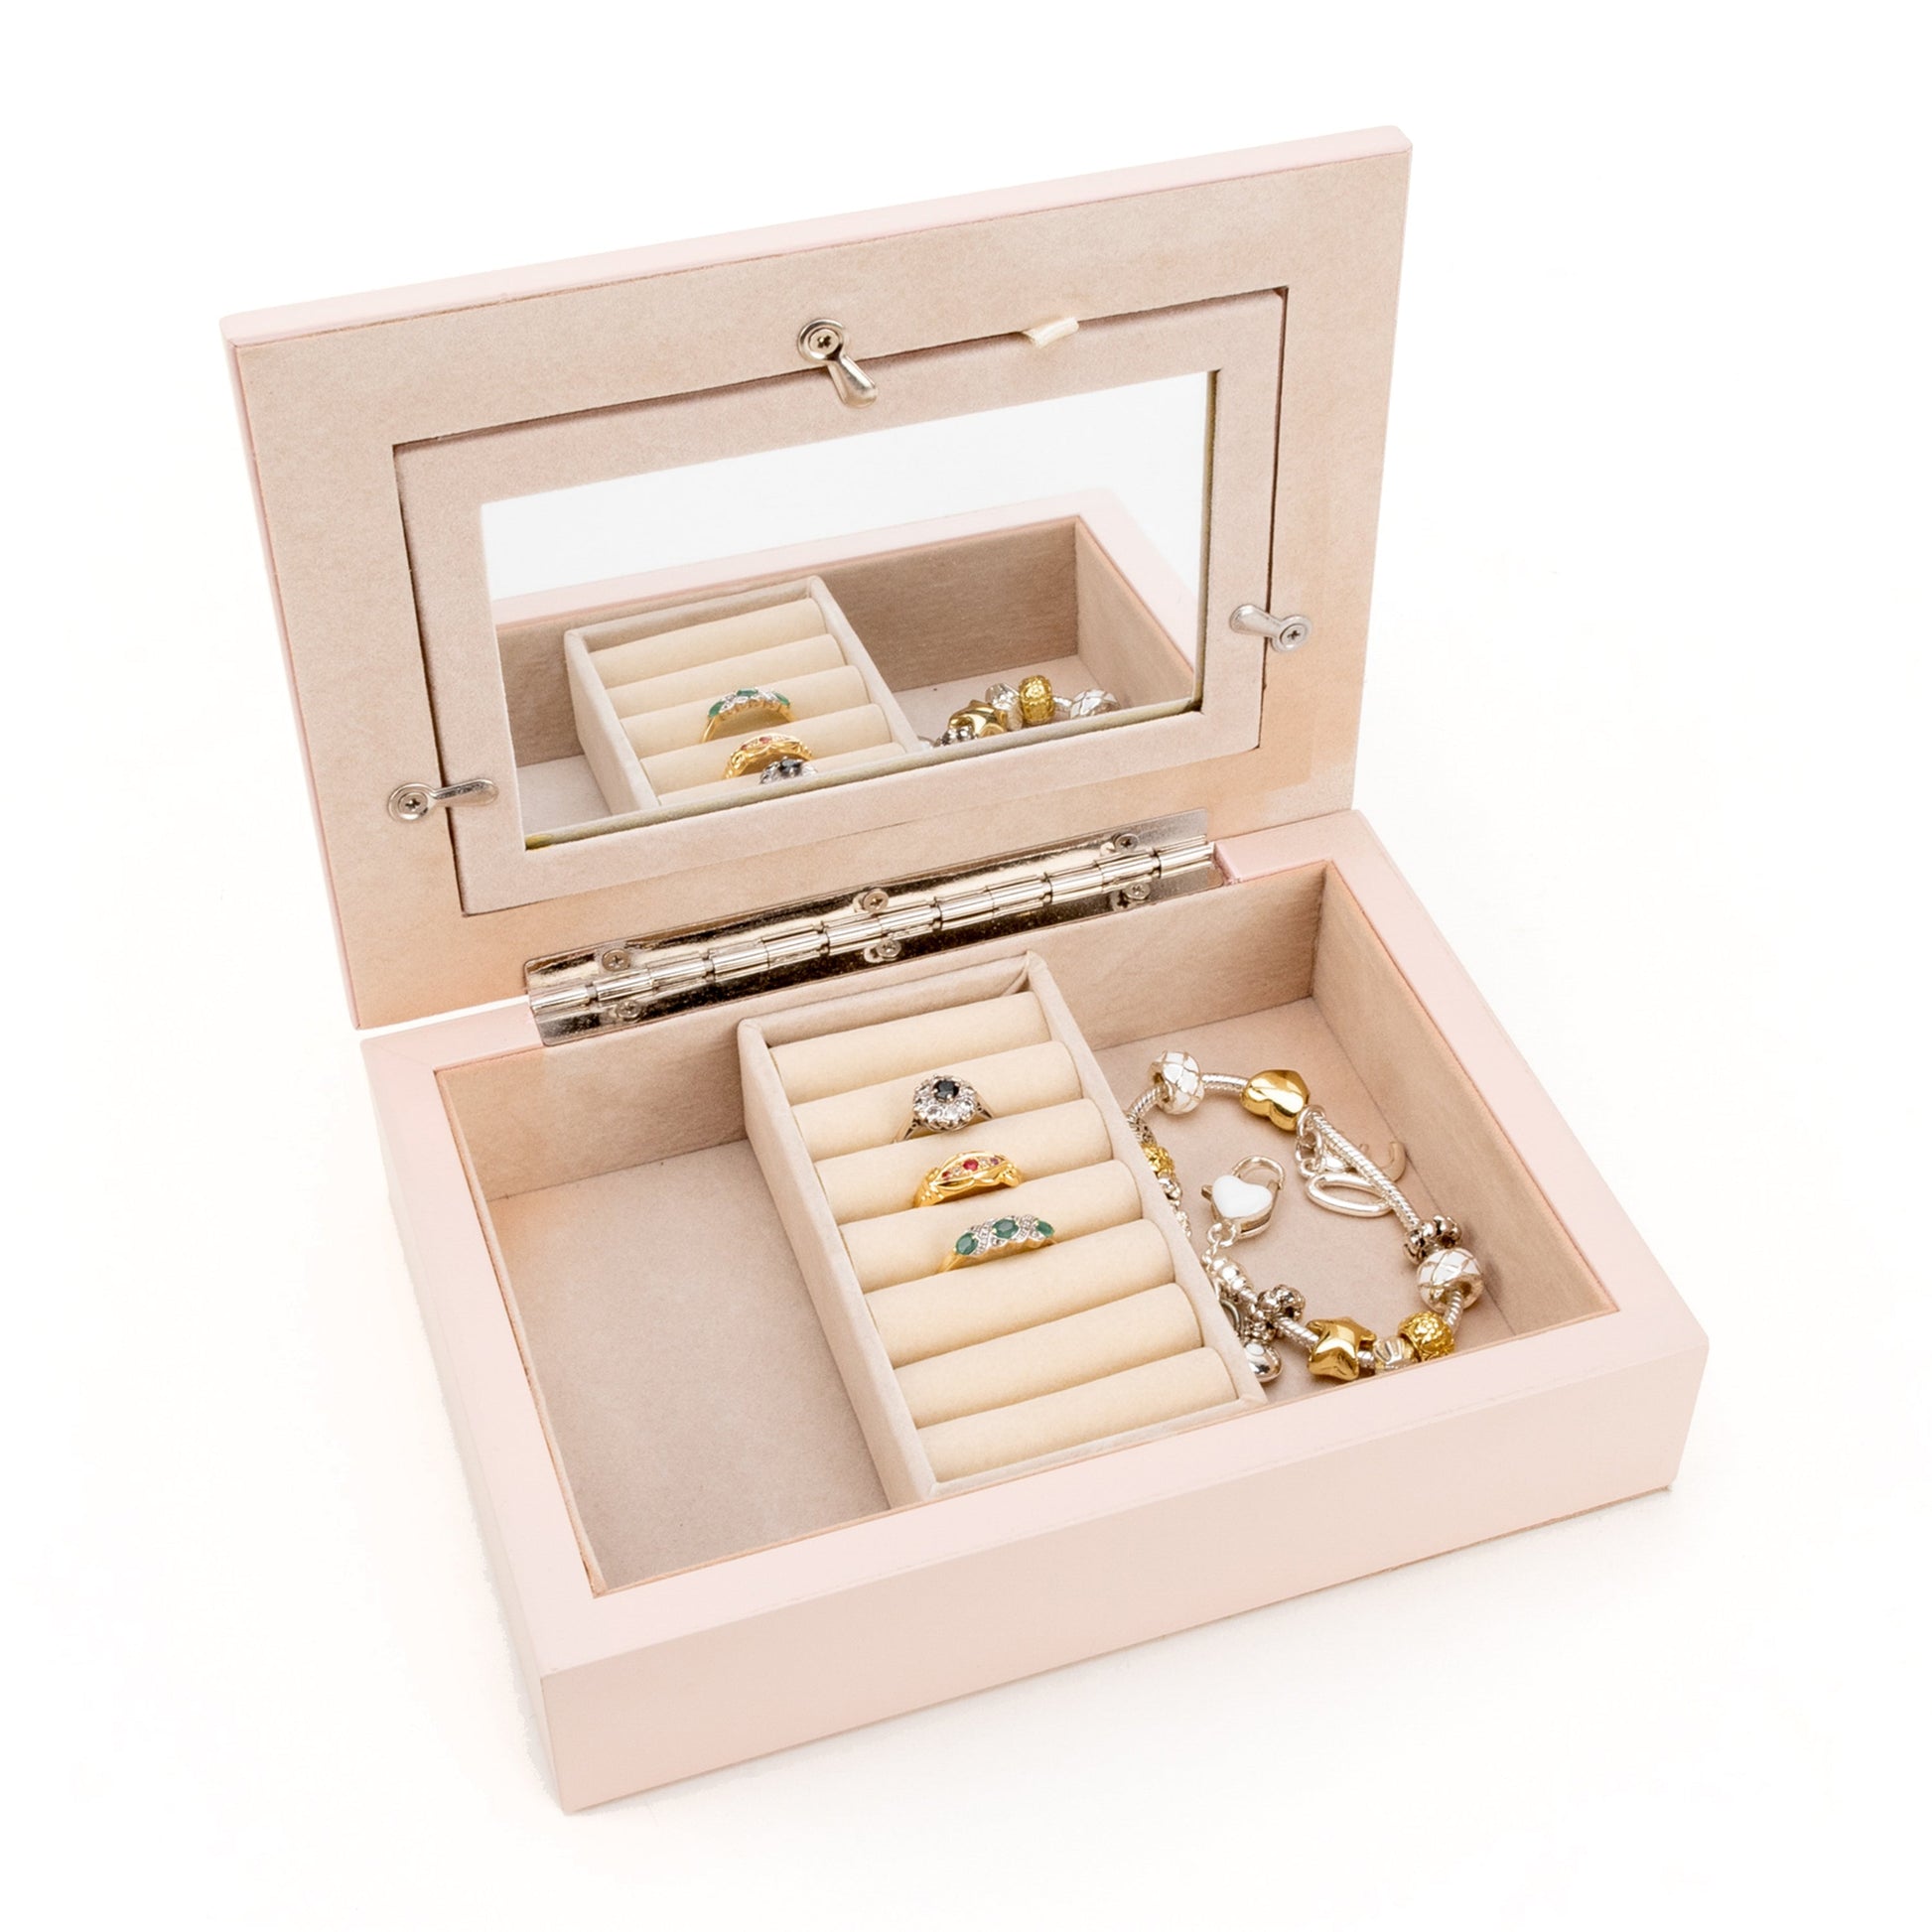 Personalized Jewellery Boxes & Storage - Personalized Blush Pink & Silver Photo Jewellery Box 